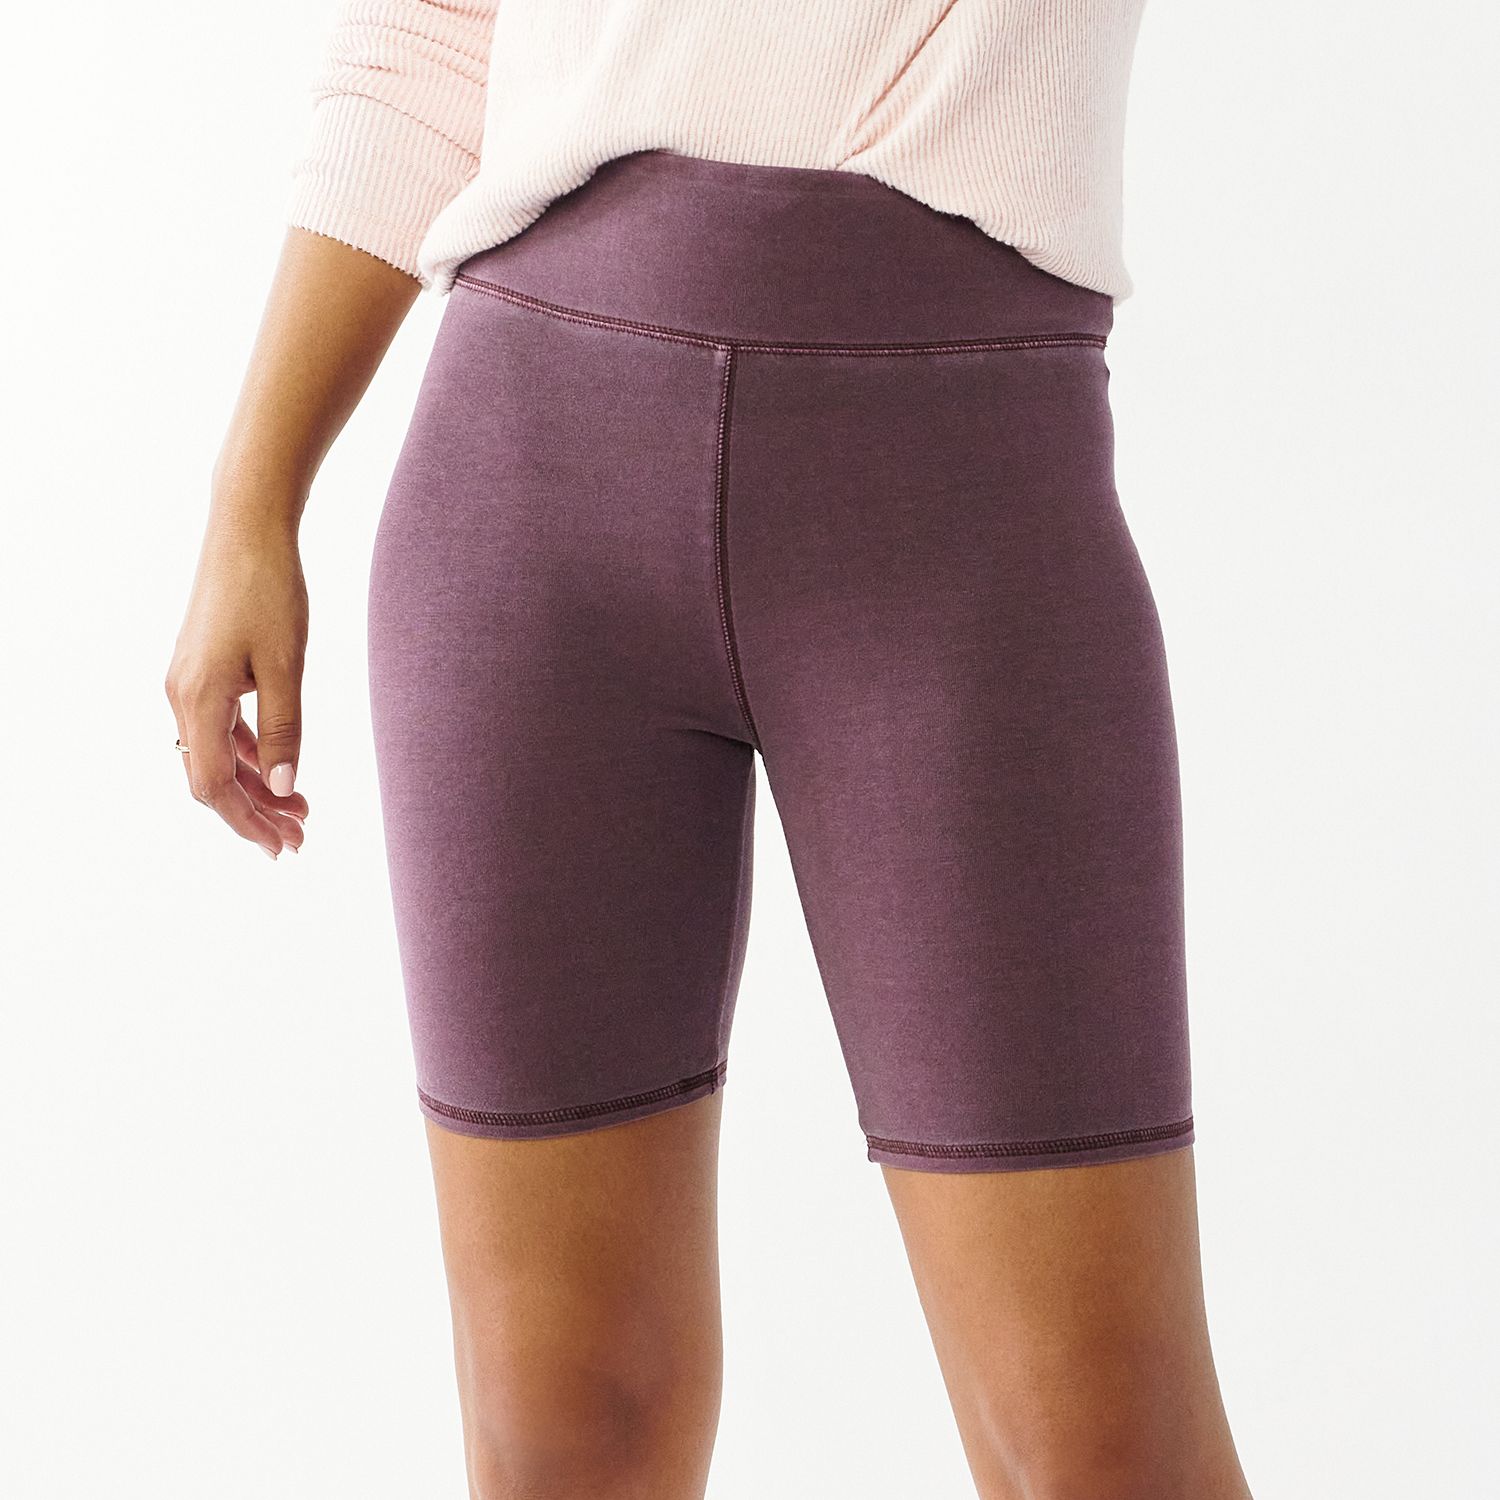 Bike Shorts from Nylon Spandex for Girls